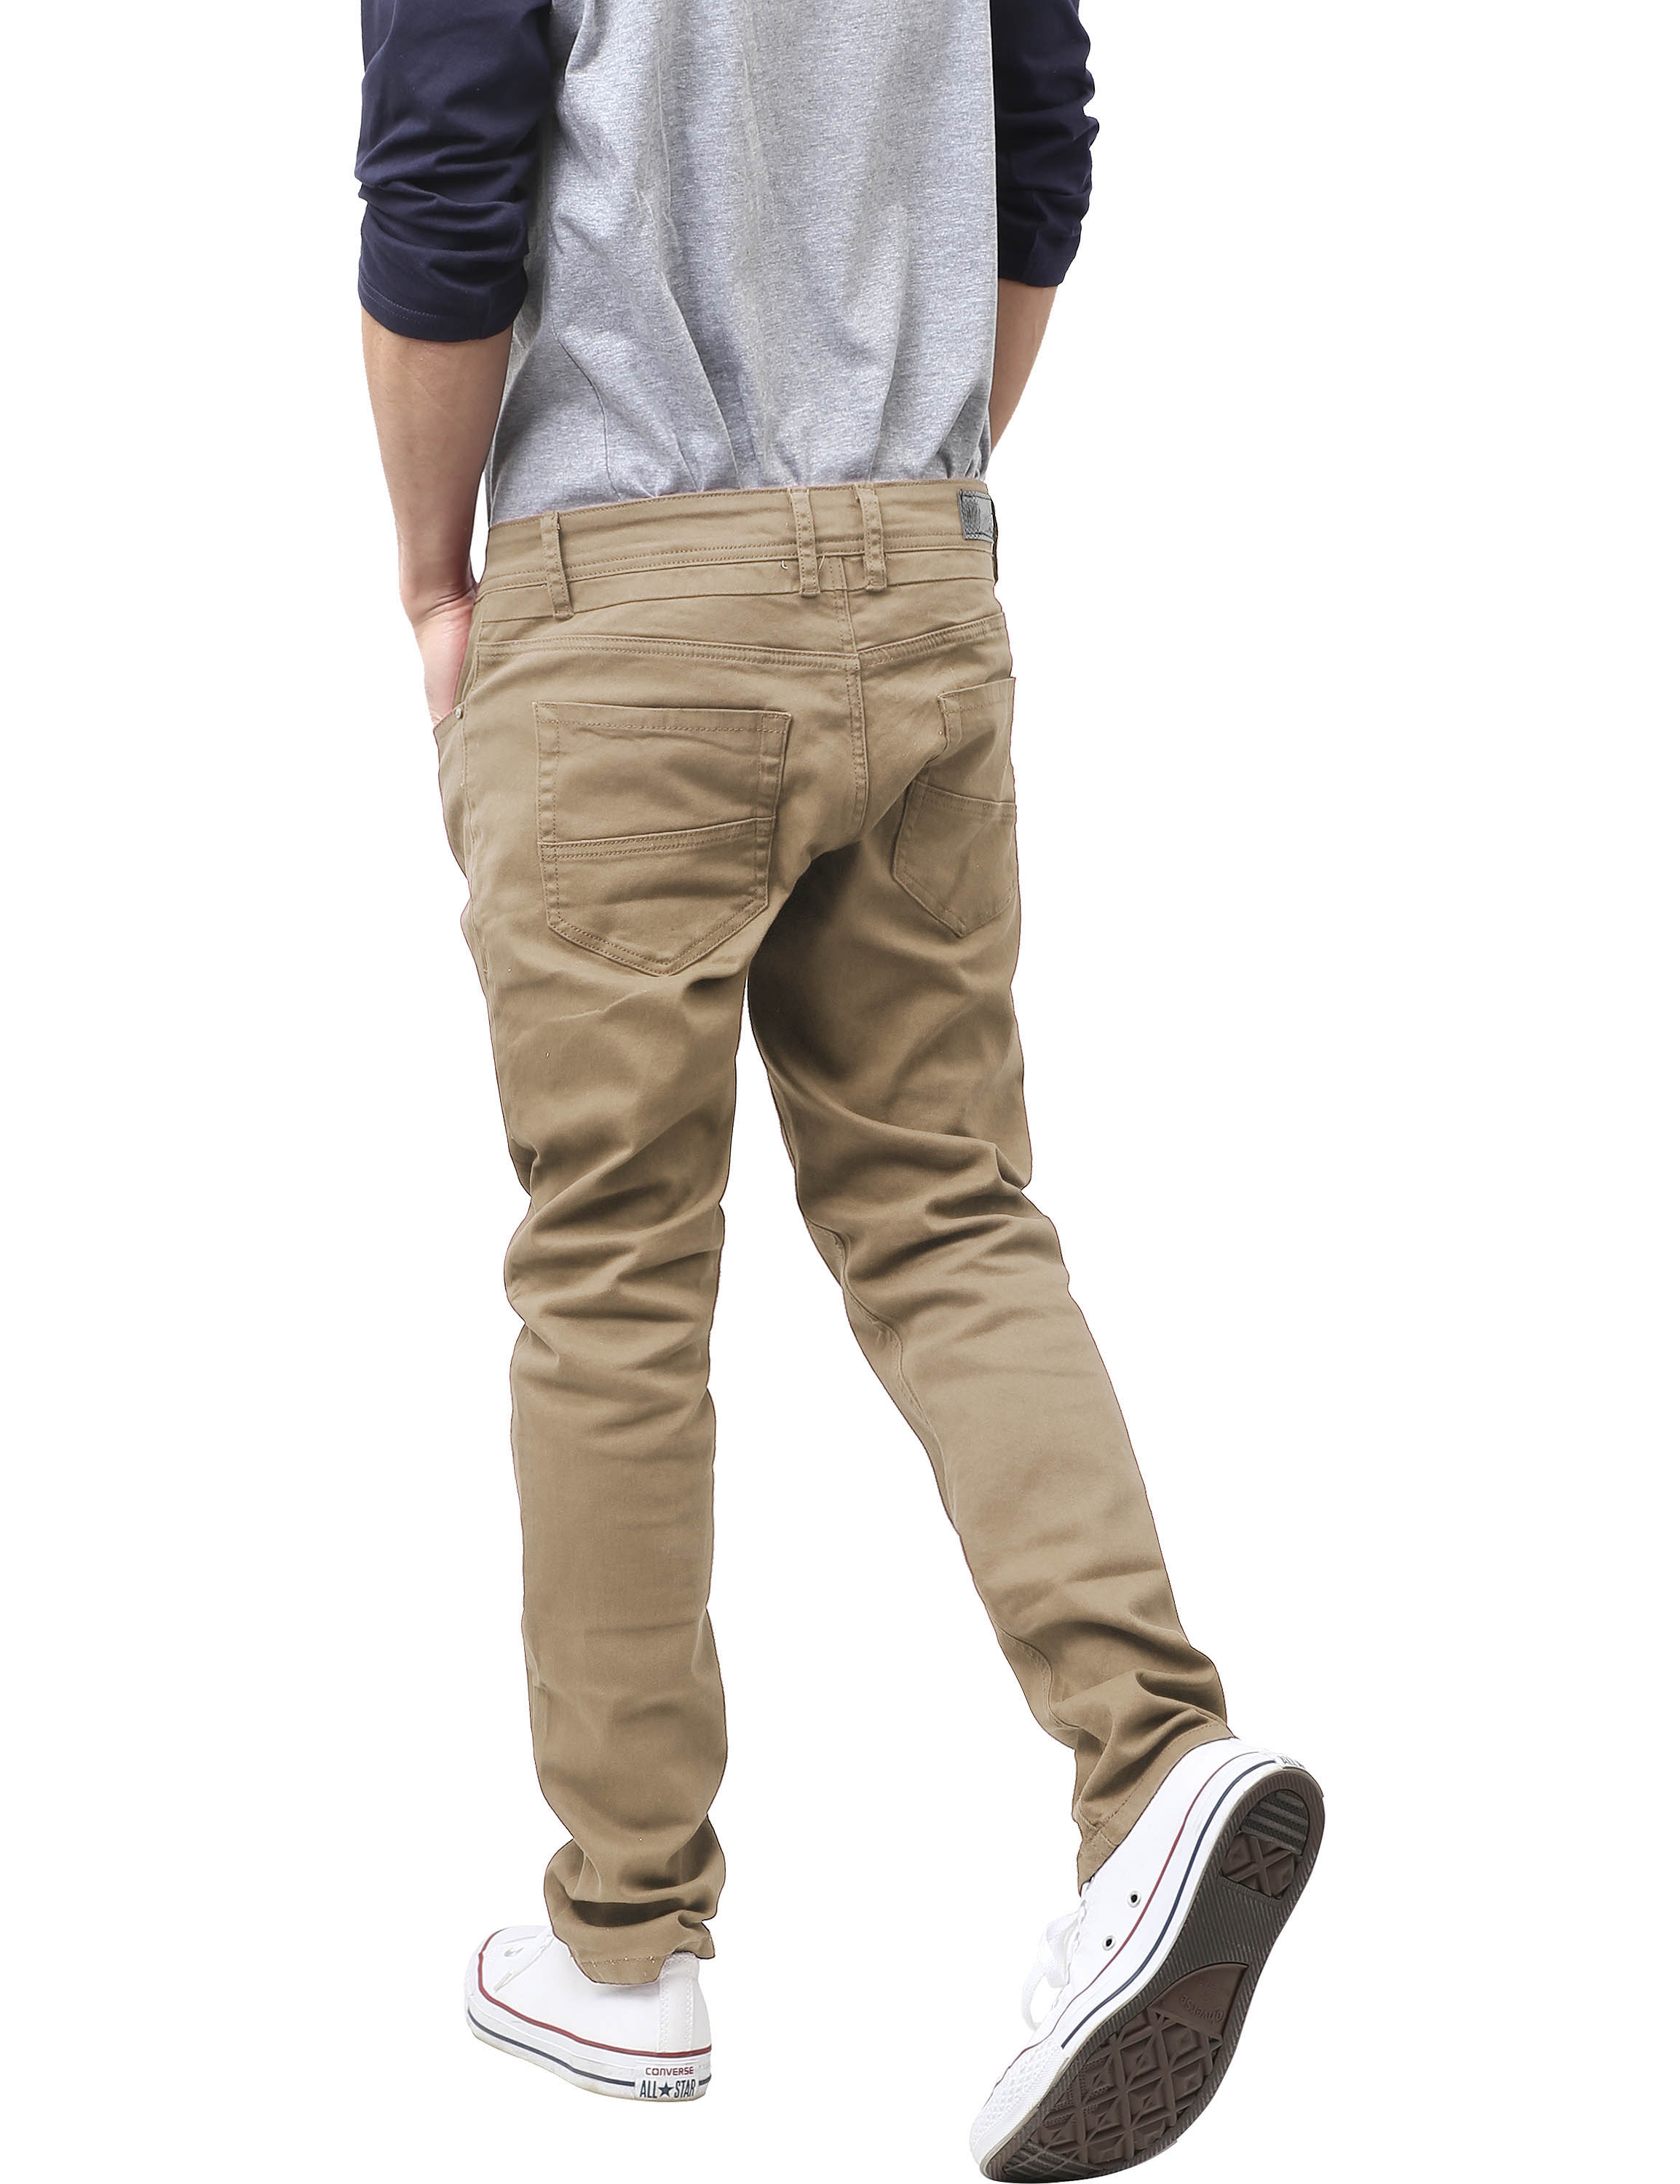 Ma Croix Mens Skinny Jeans Stretch Skinny Fit Slim Denim Pants - image 4 of 6